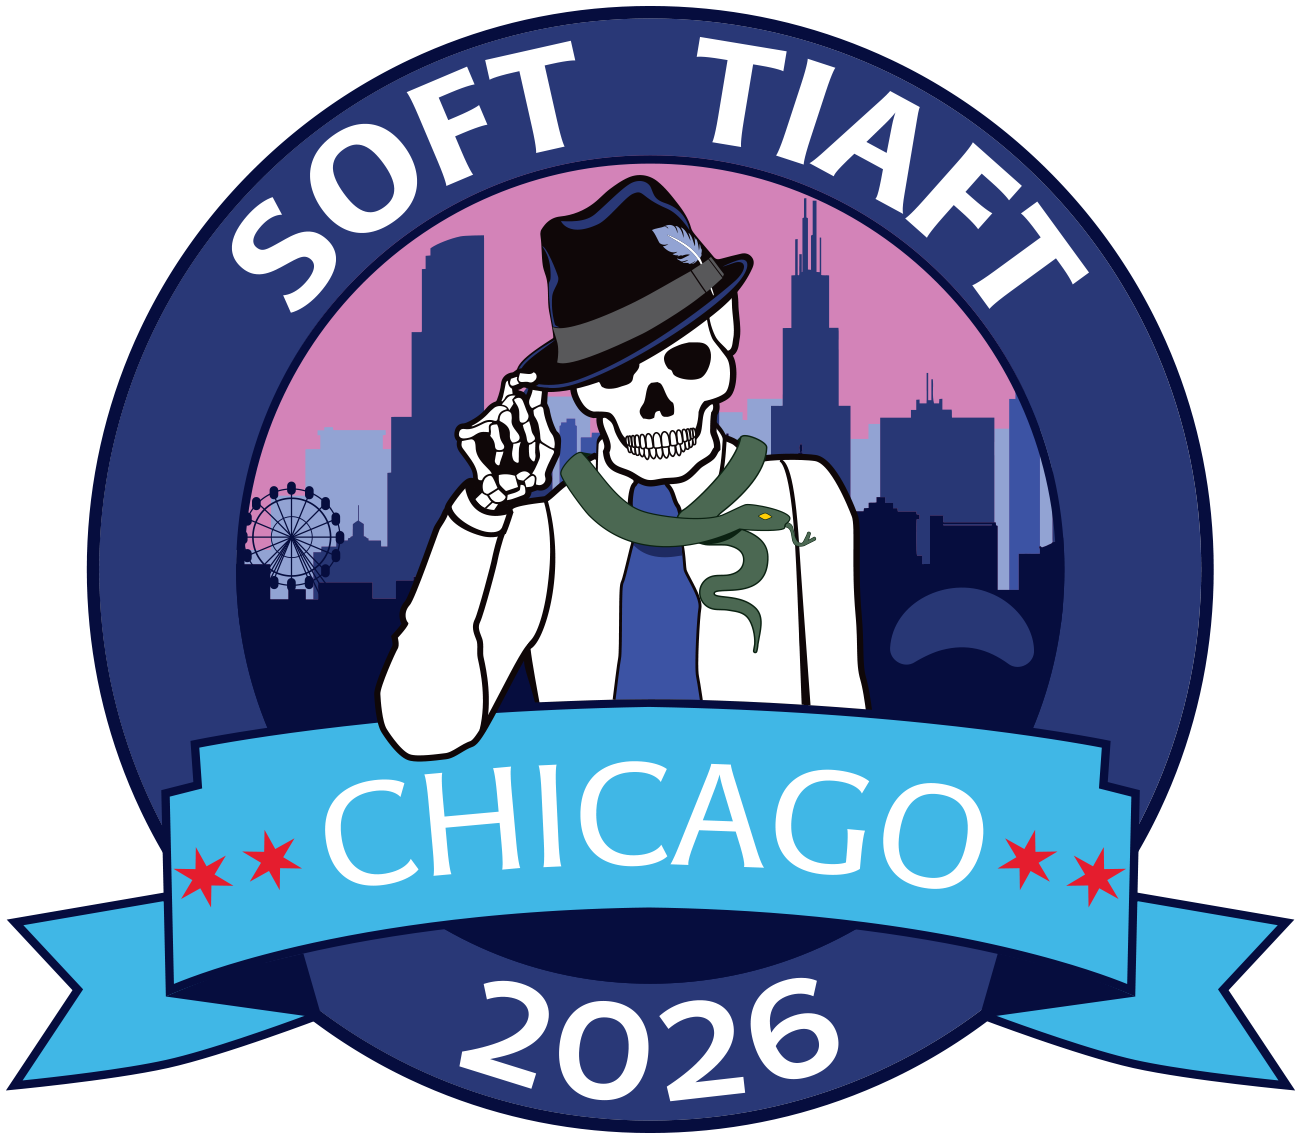 Chicago, 2026